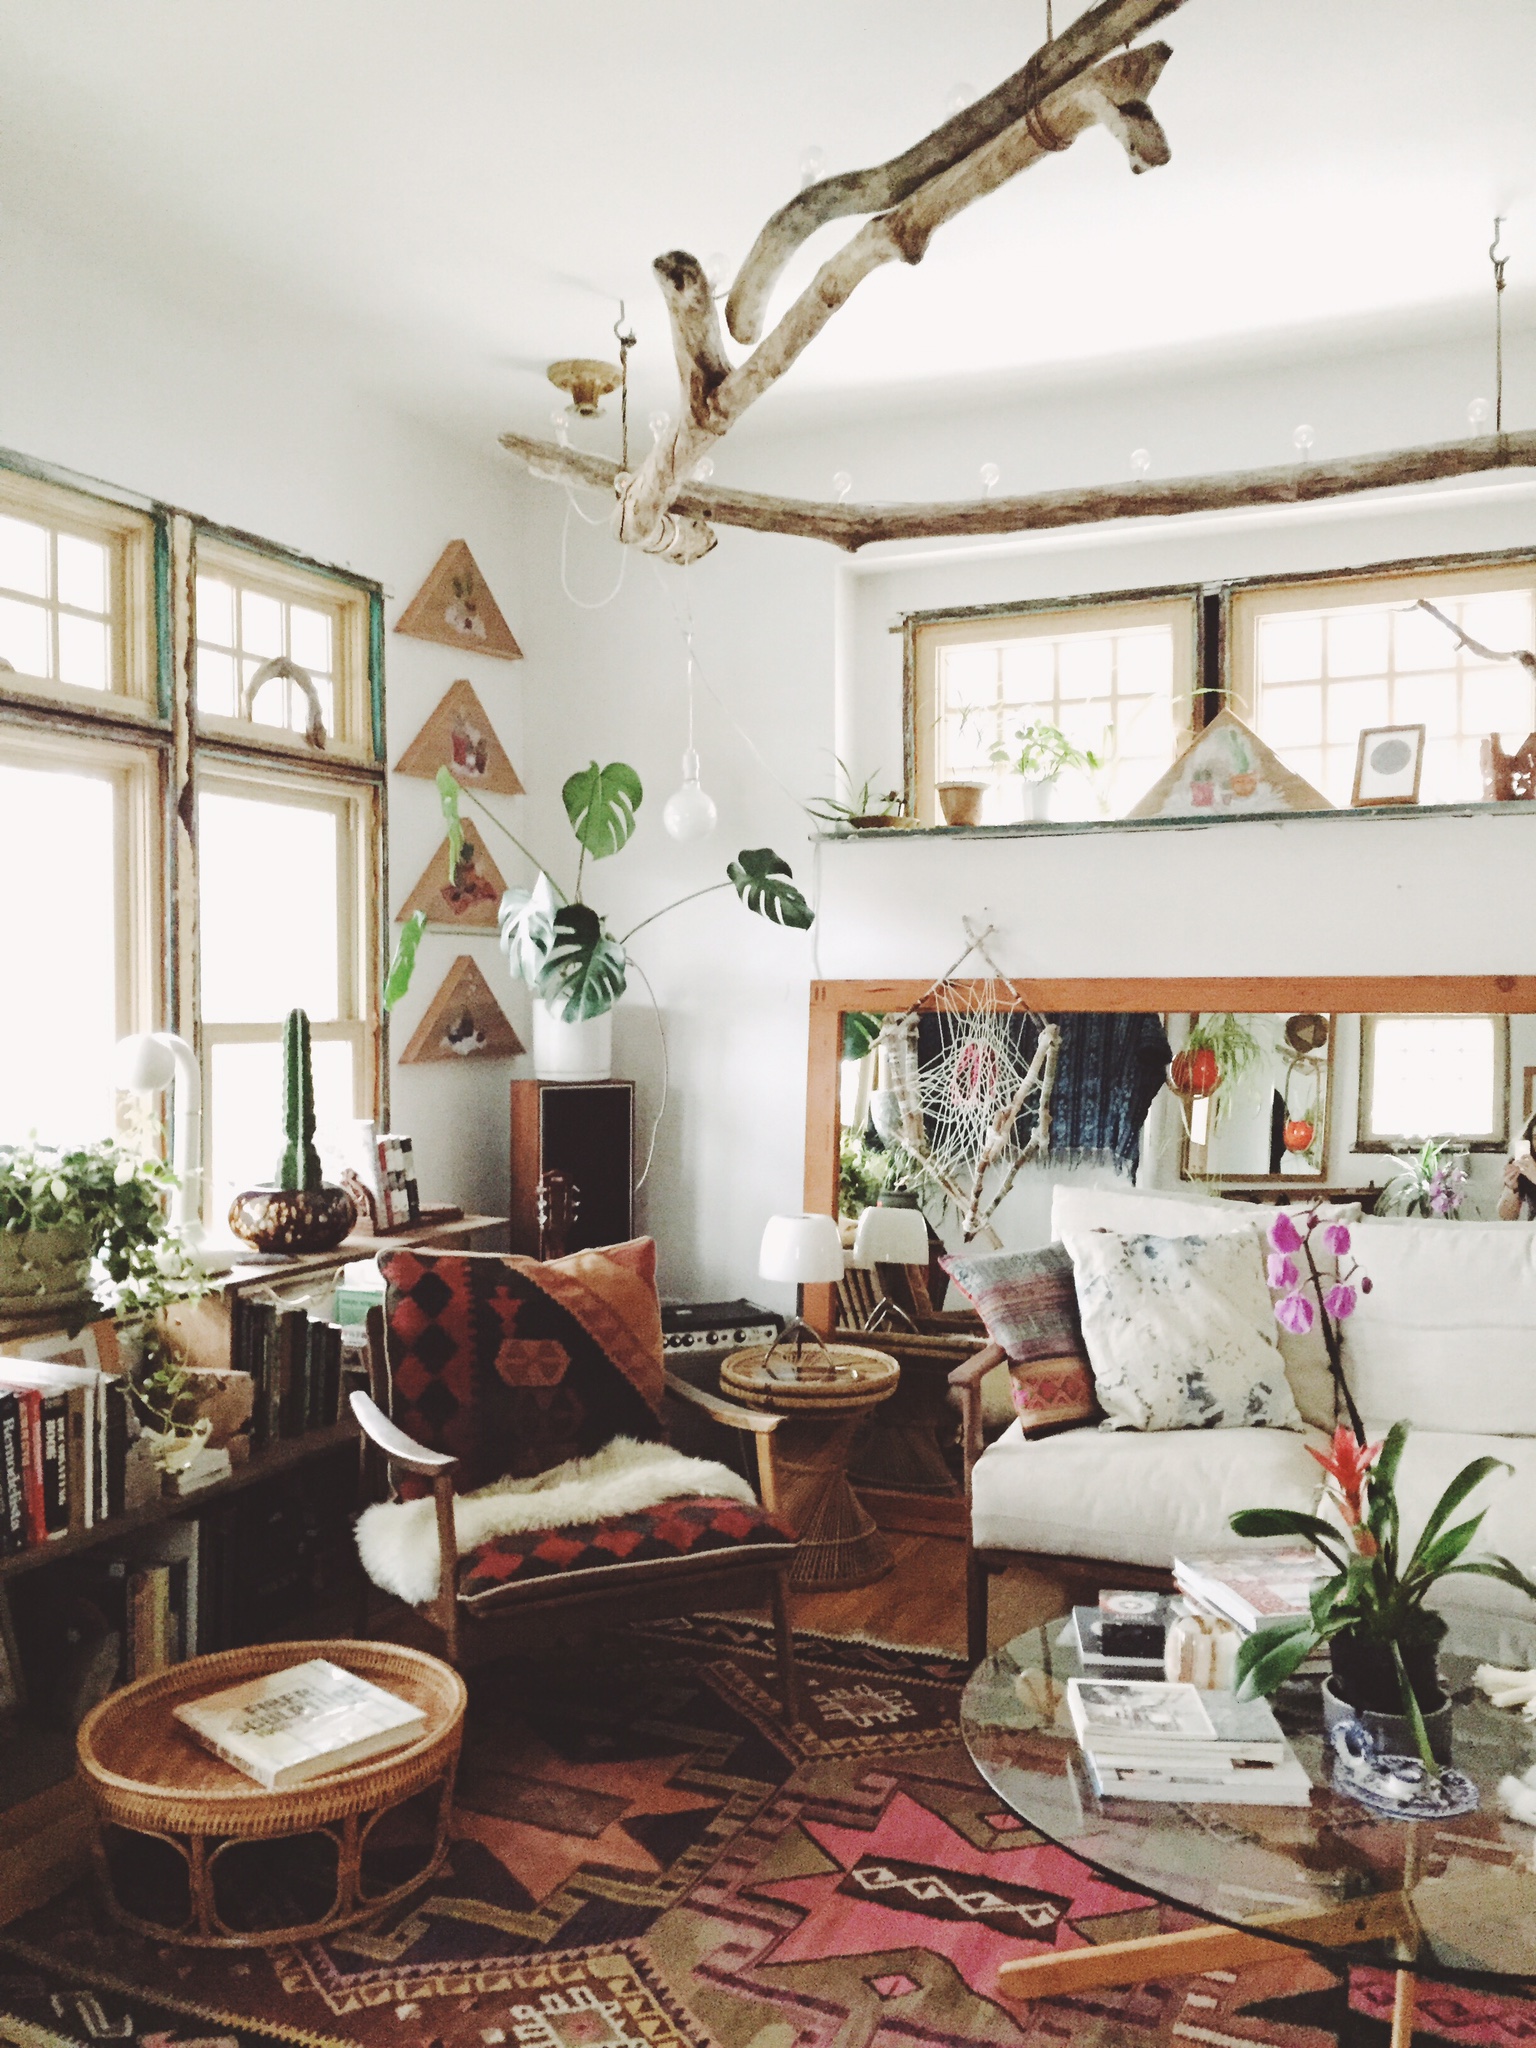 Macrame decor ideas for a modern home - Gathered